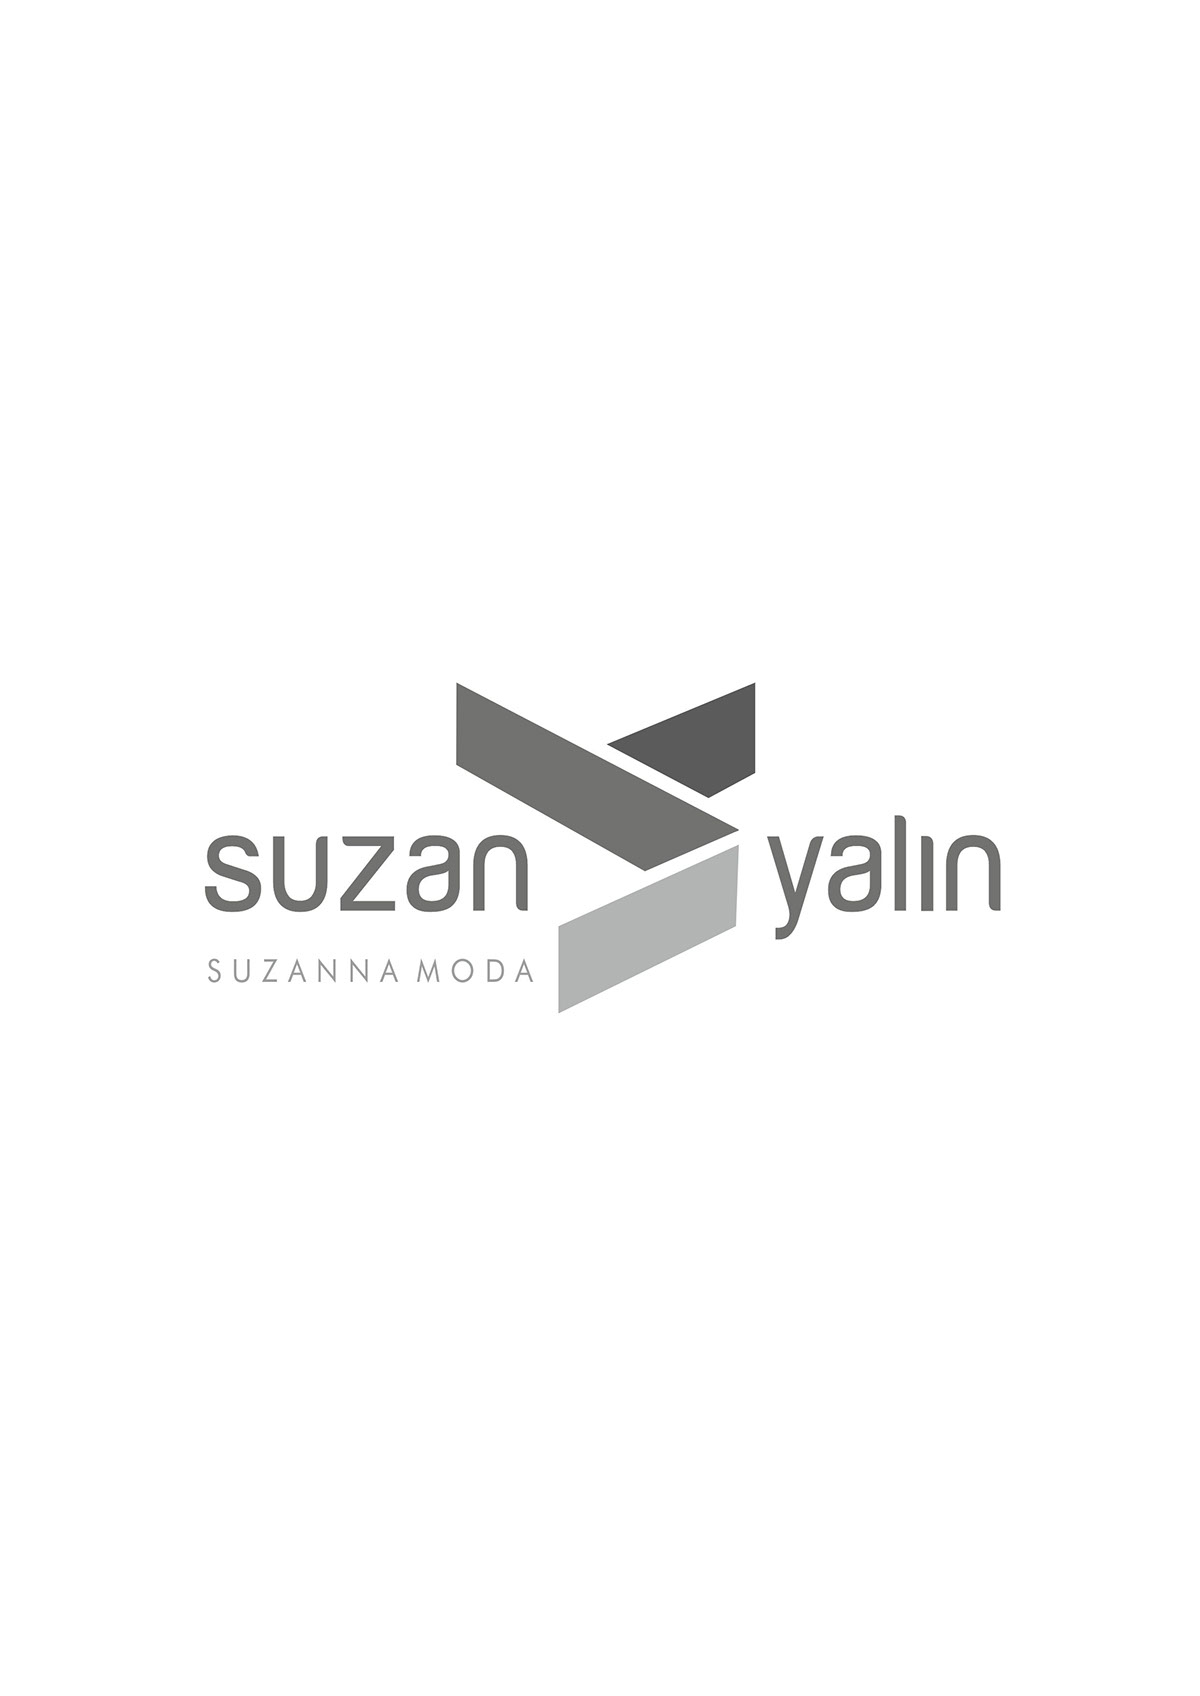 kurumsal kimlik logo tasarım creative ajans istanbul design desginer company